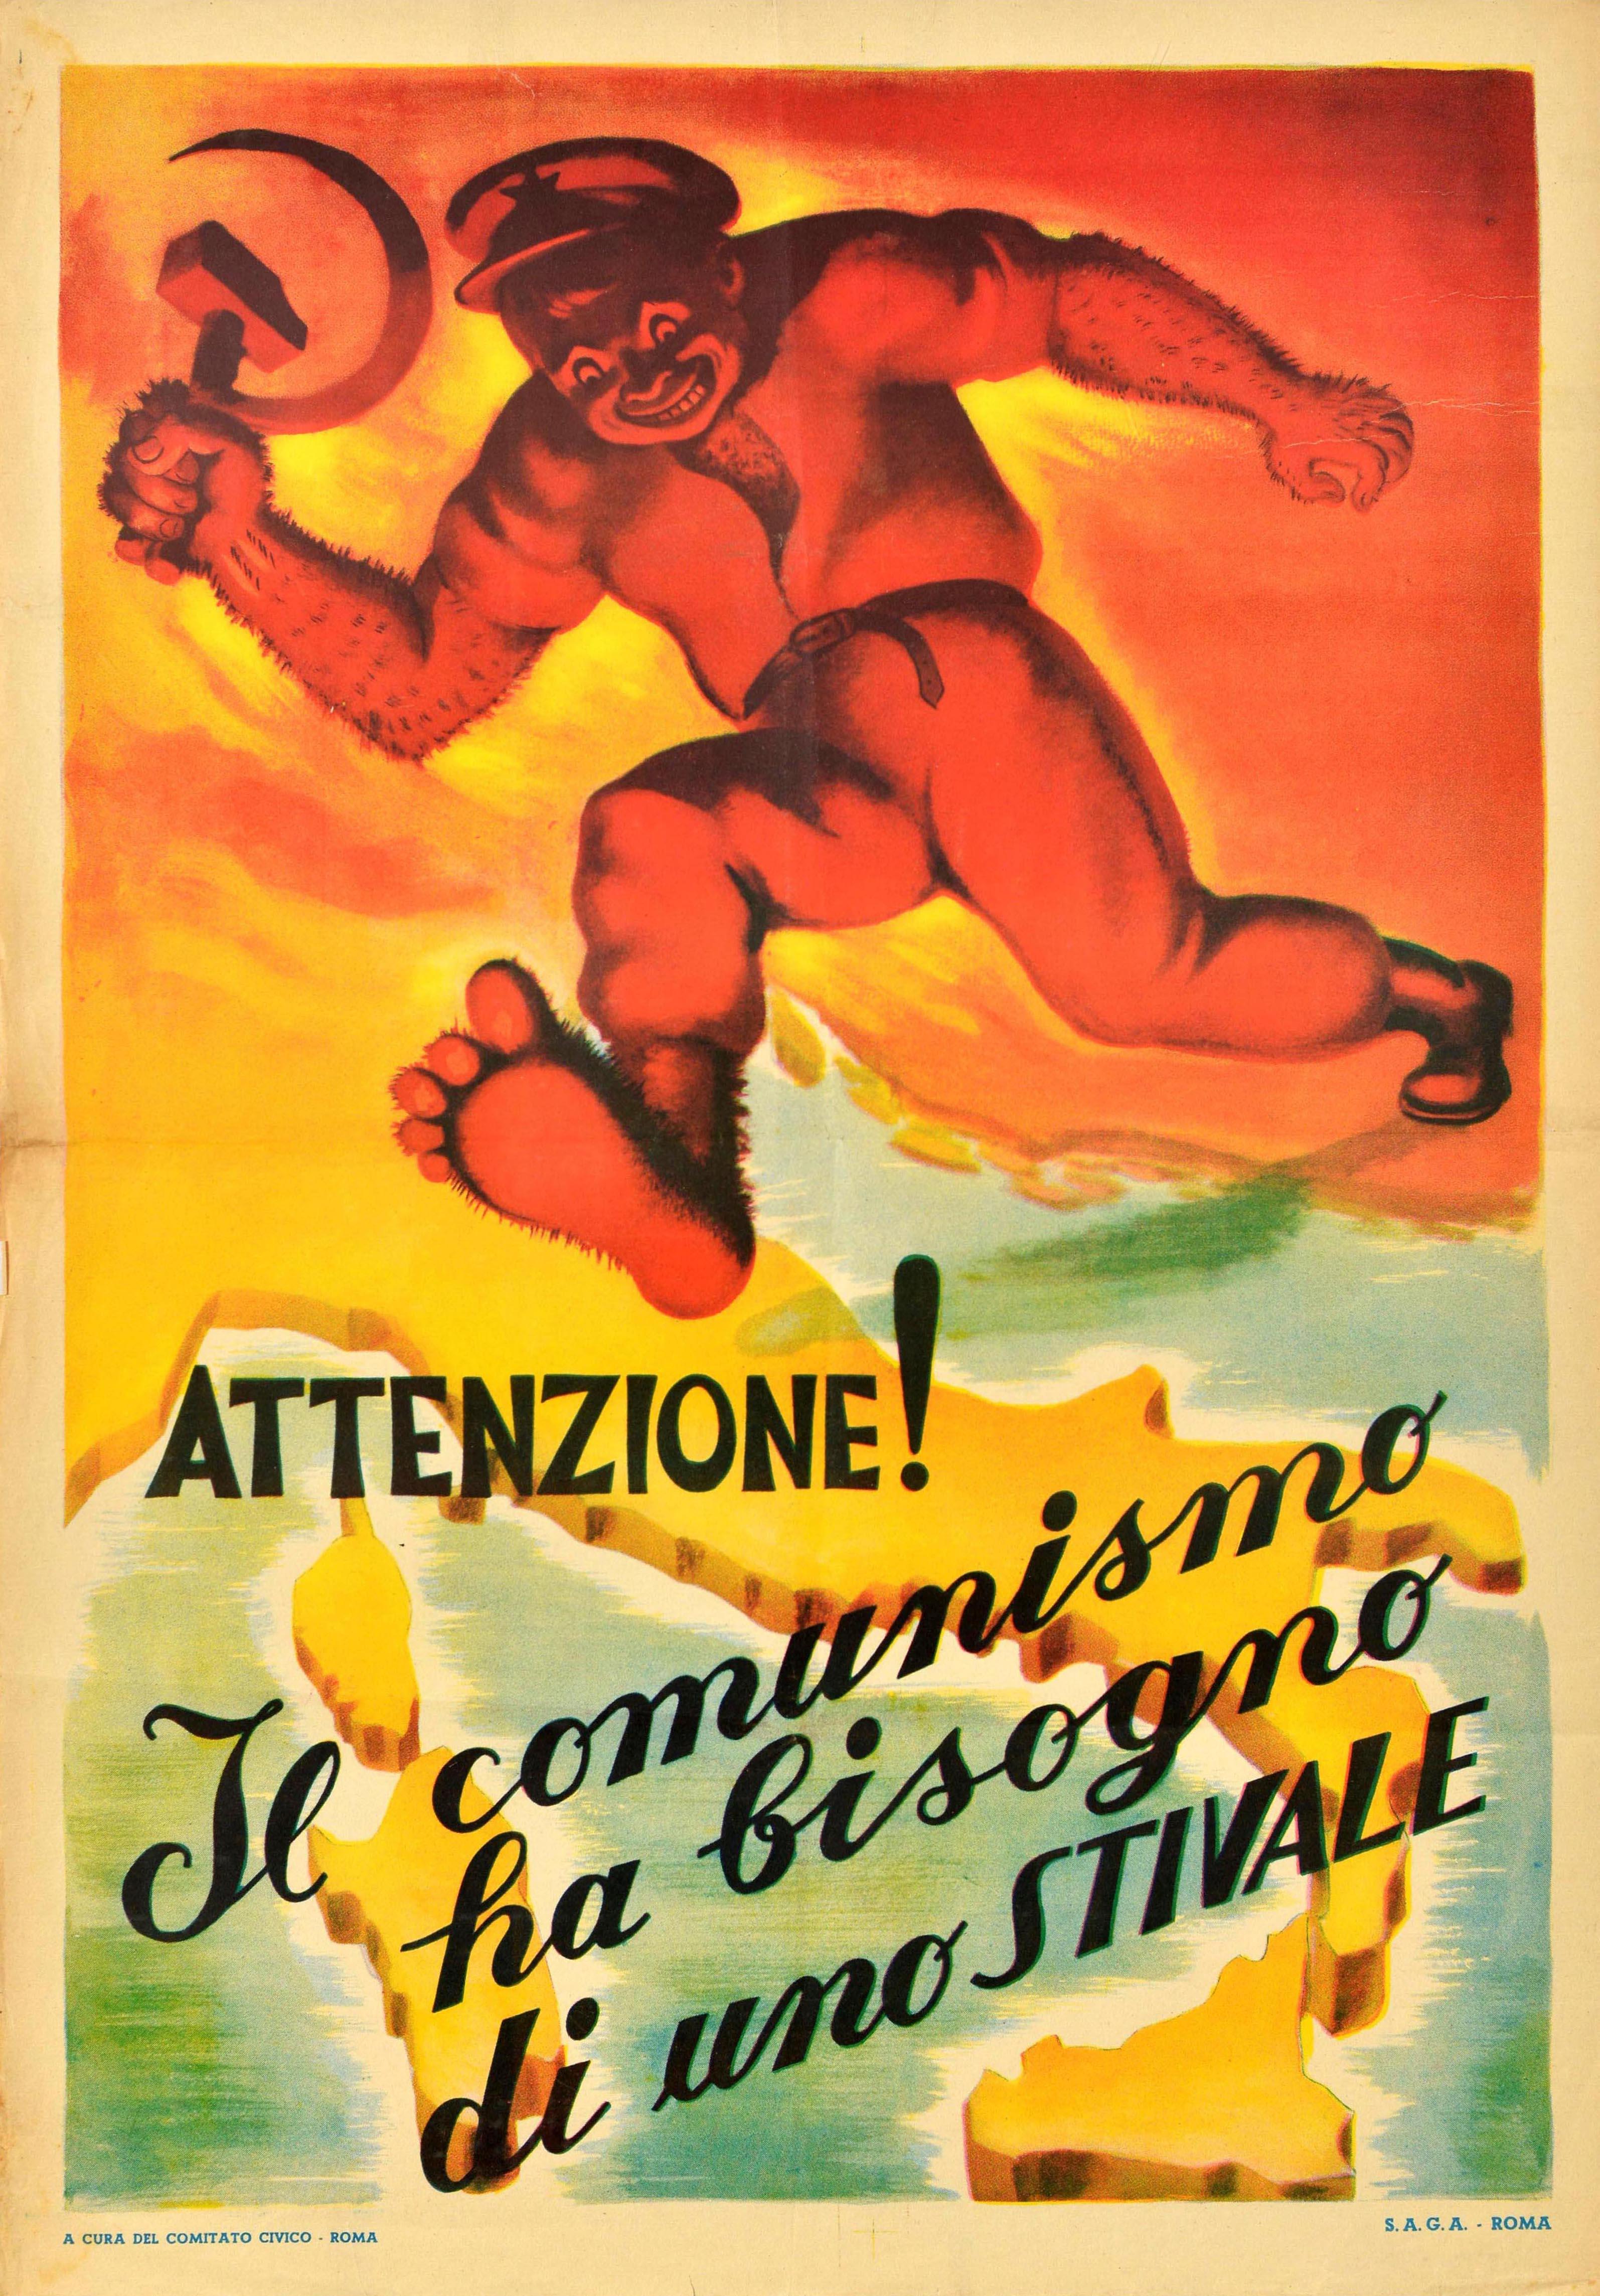 Unknown Print - Original Vintage Propaganda Poster Communism Needs A Boot Italian Elections